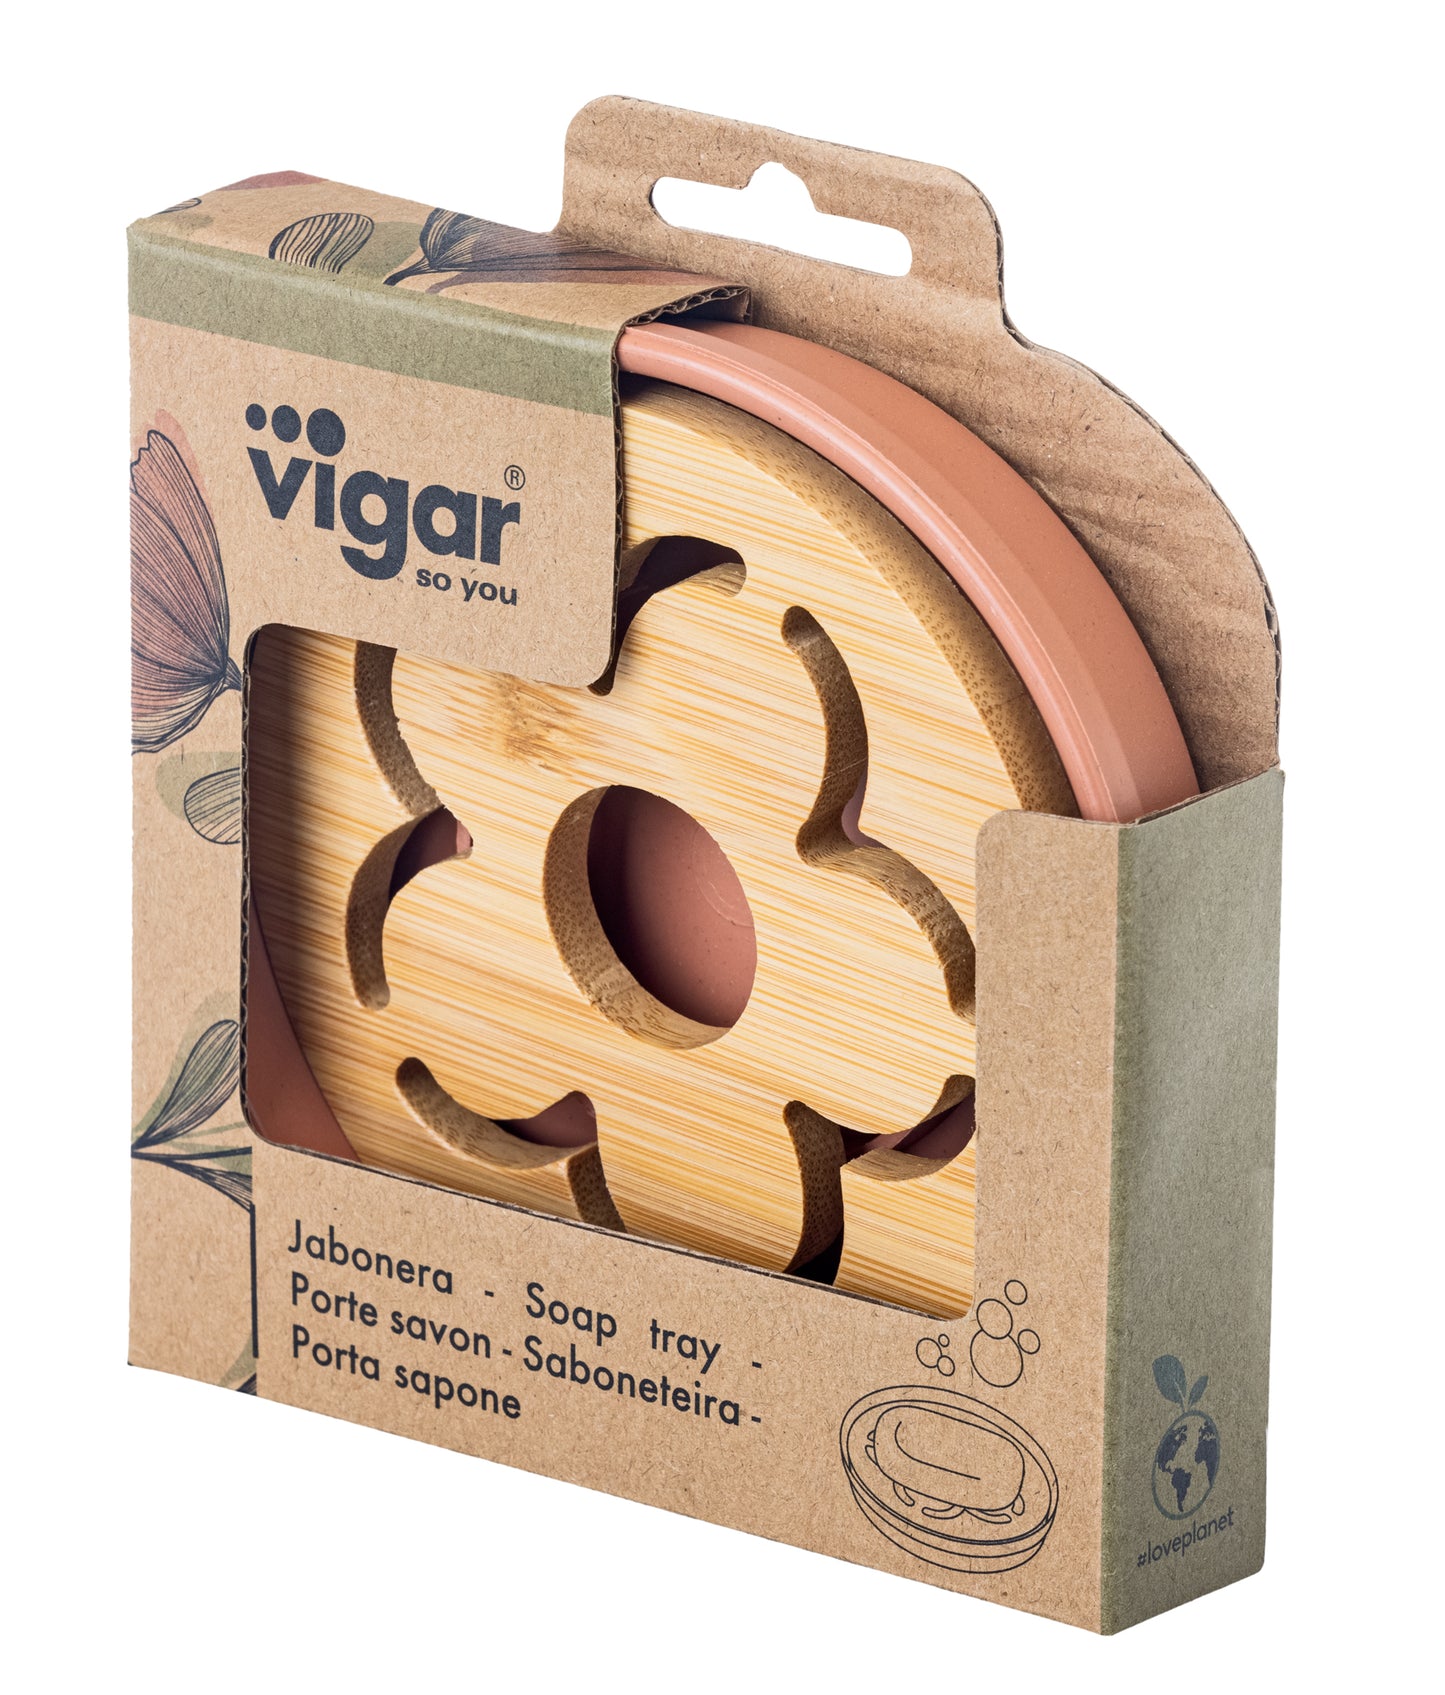 Vigar Florganic Soap Tray